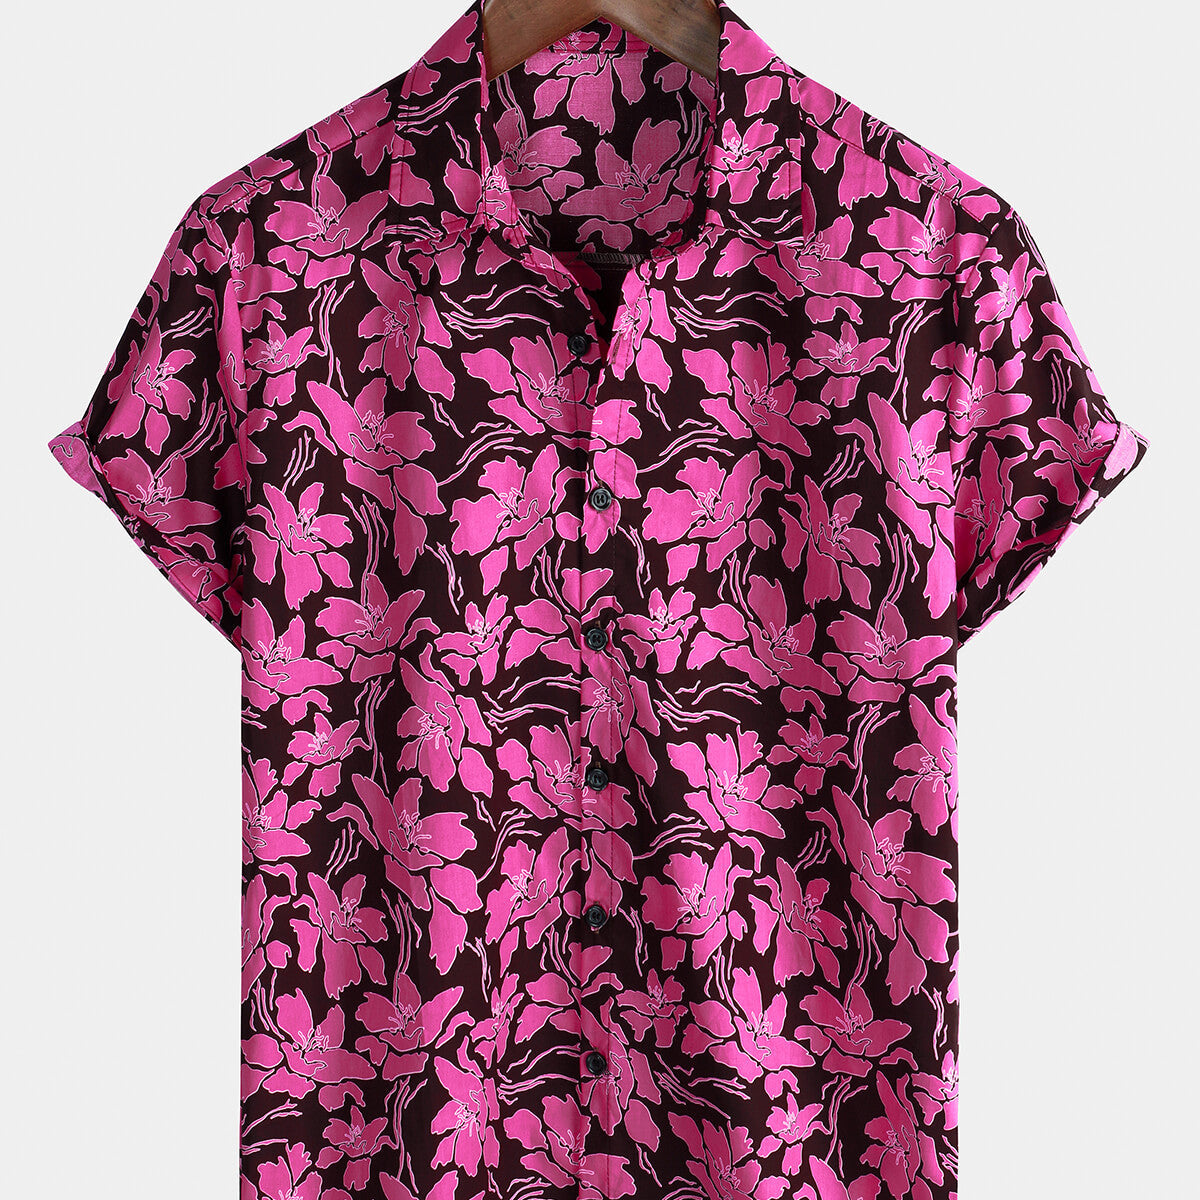 Men's Short Sleeve Floral Pink Holiday Button Up Cotton Beach Shirt